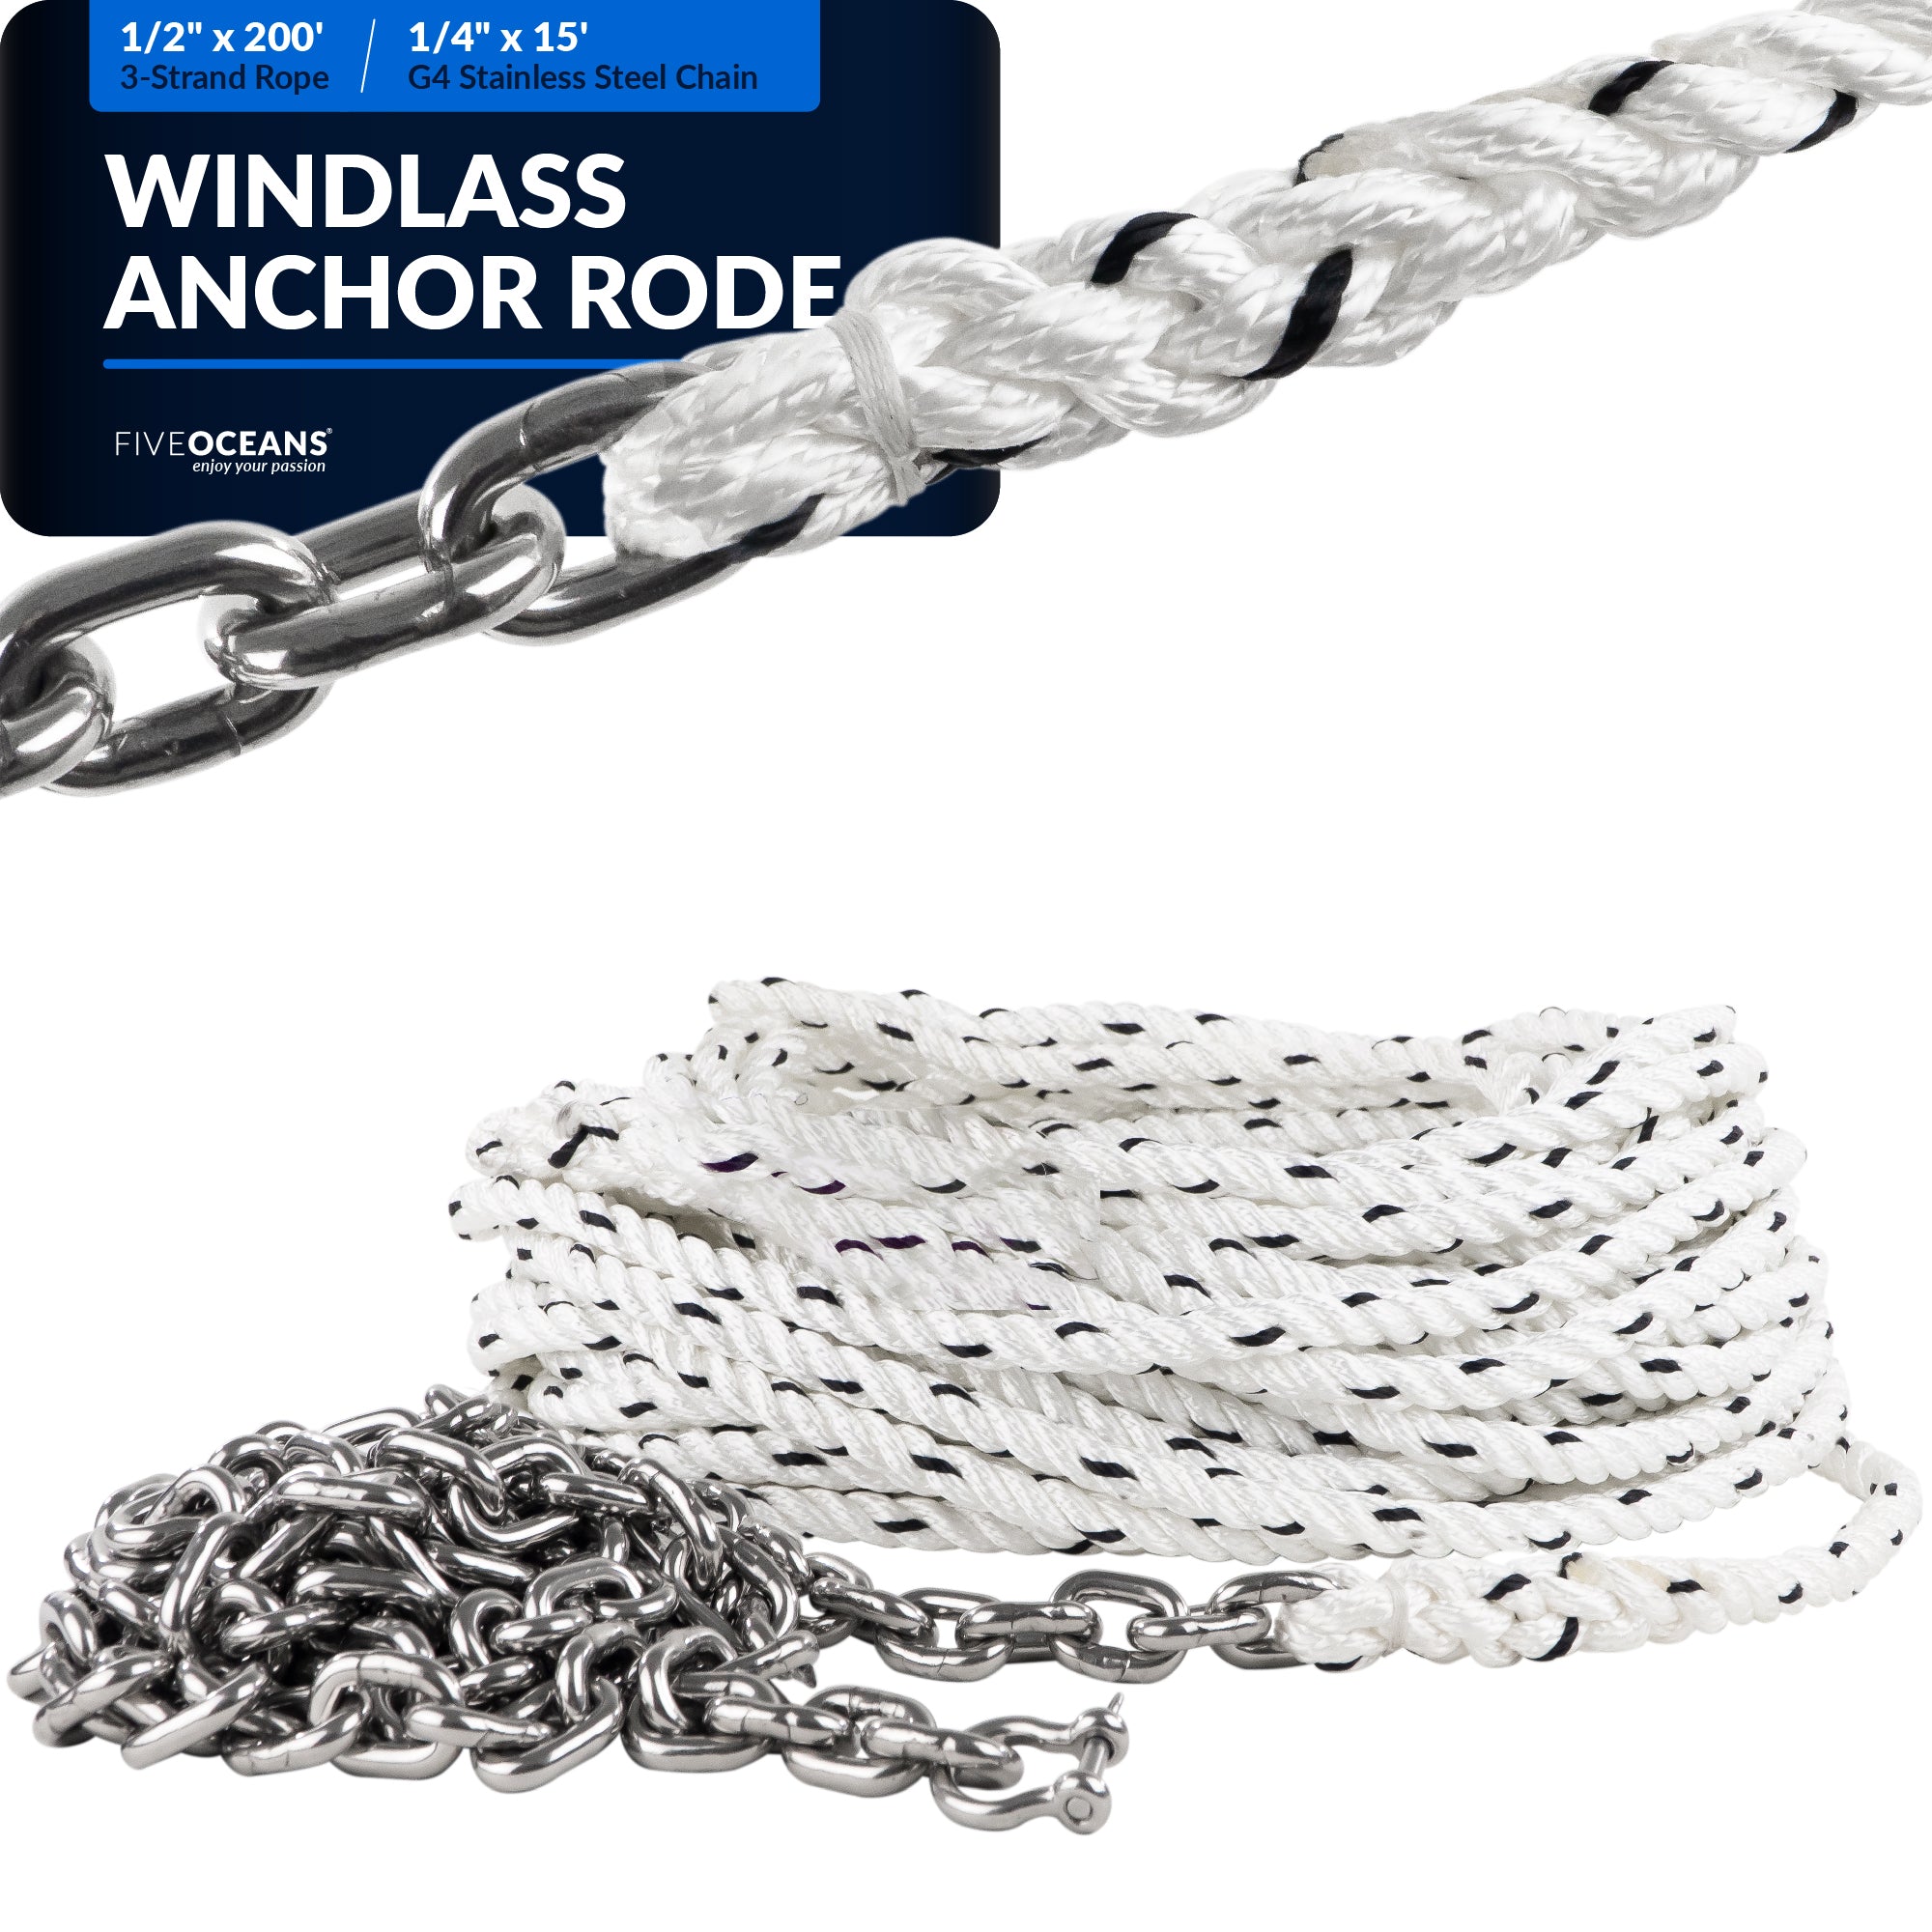 Windlass Anchor Rode, 1/2" x 200' Nylon 3-Strand Rope, 1/4 x 15' G4 Stainless Steel Chain - FO4528